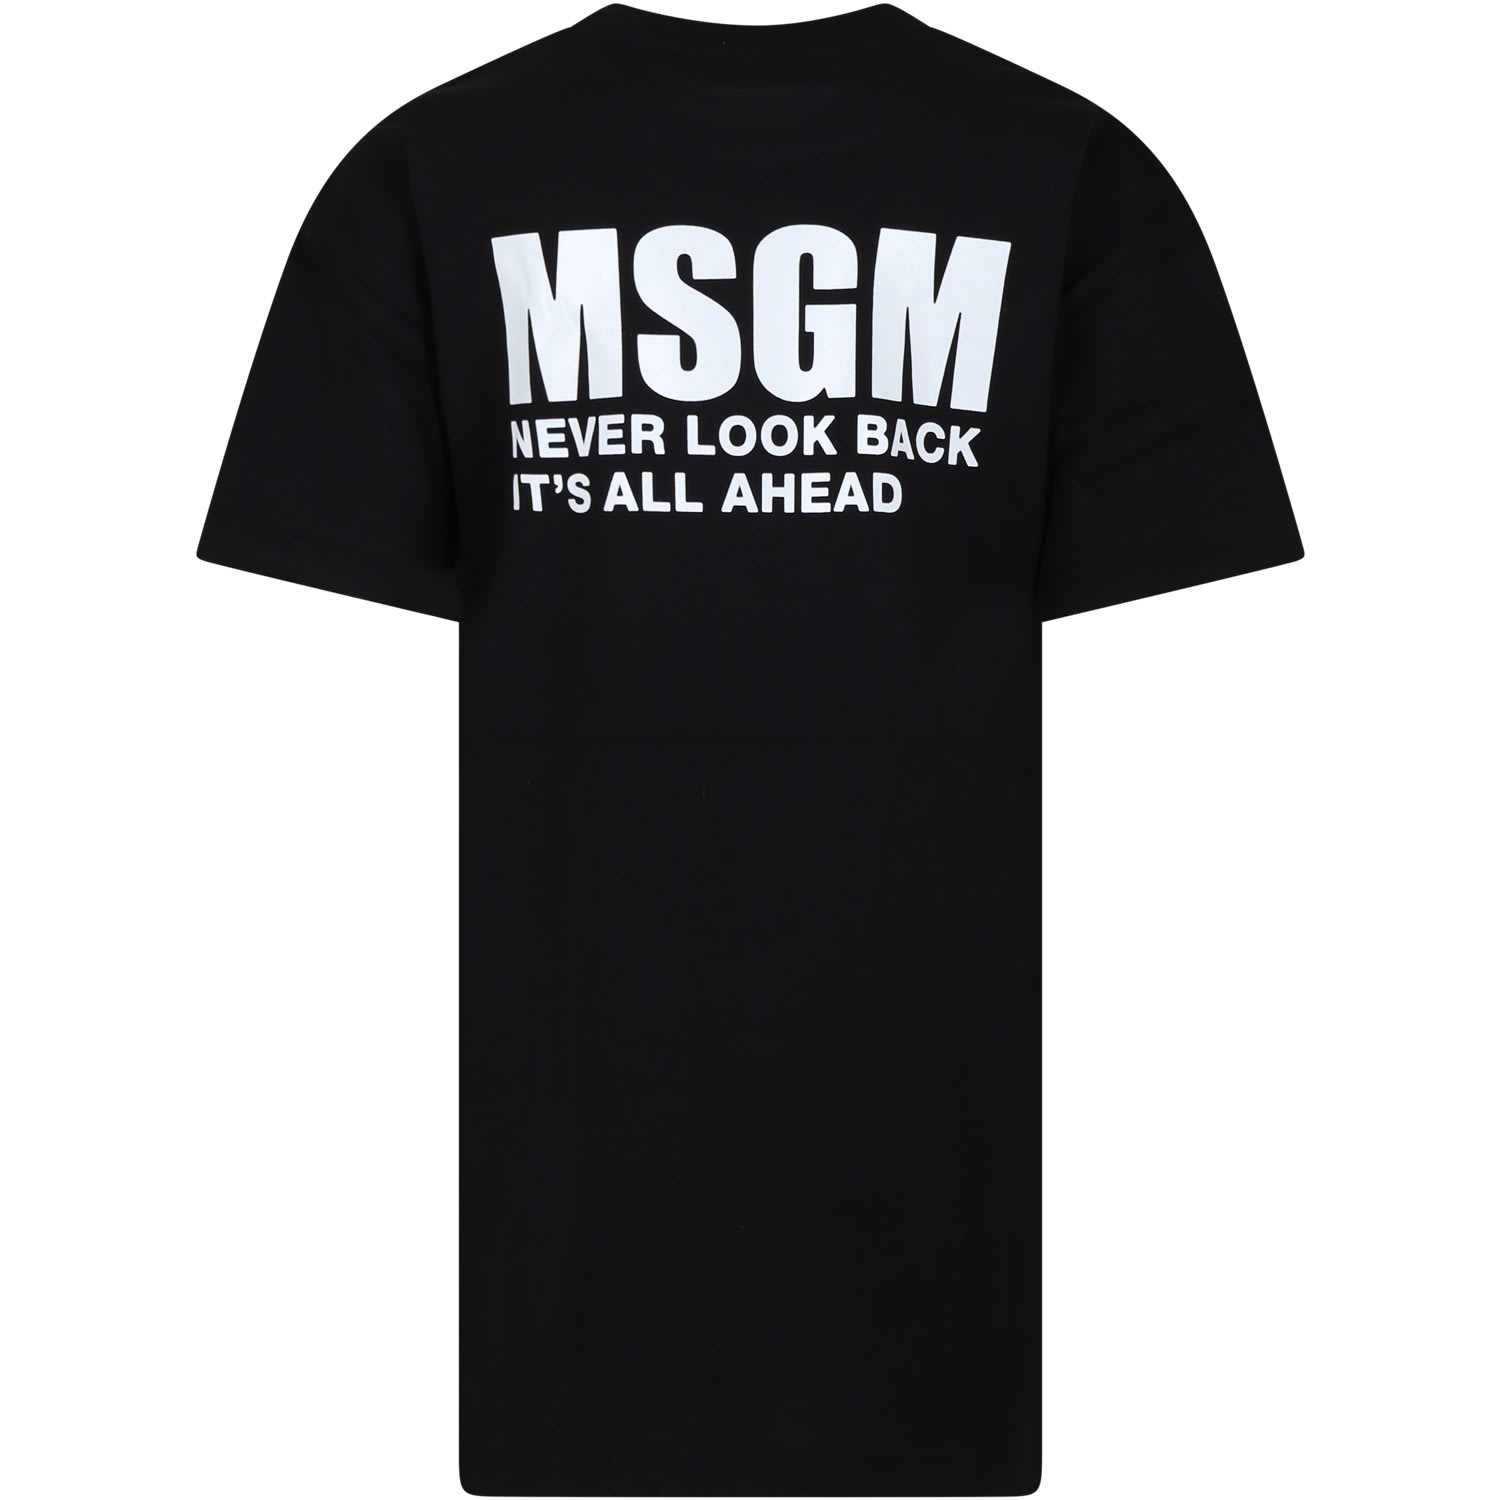 Msgm Kids' Black Dress For Girl With Logo